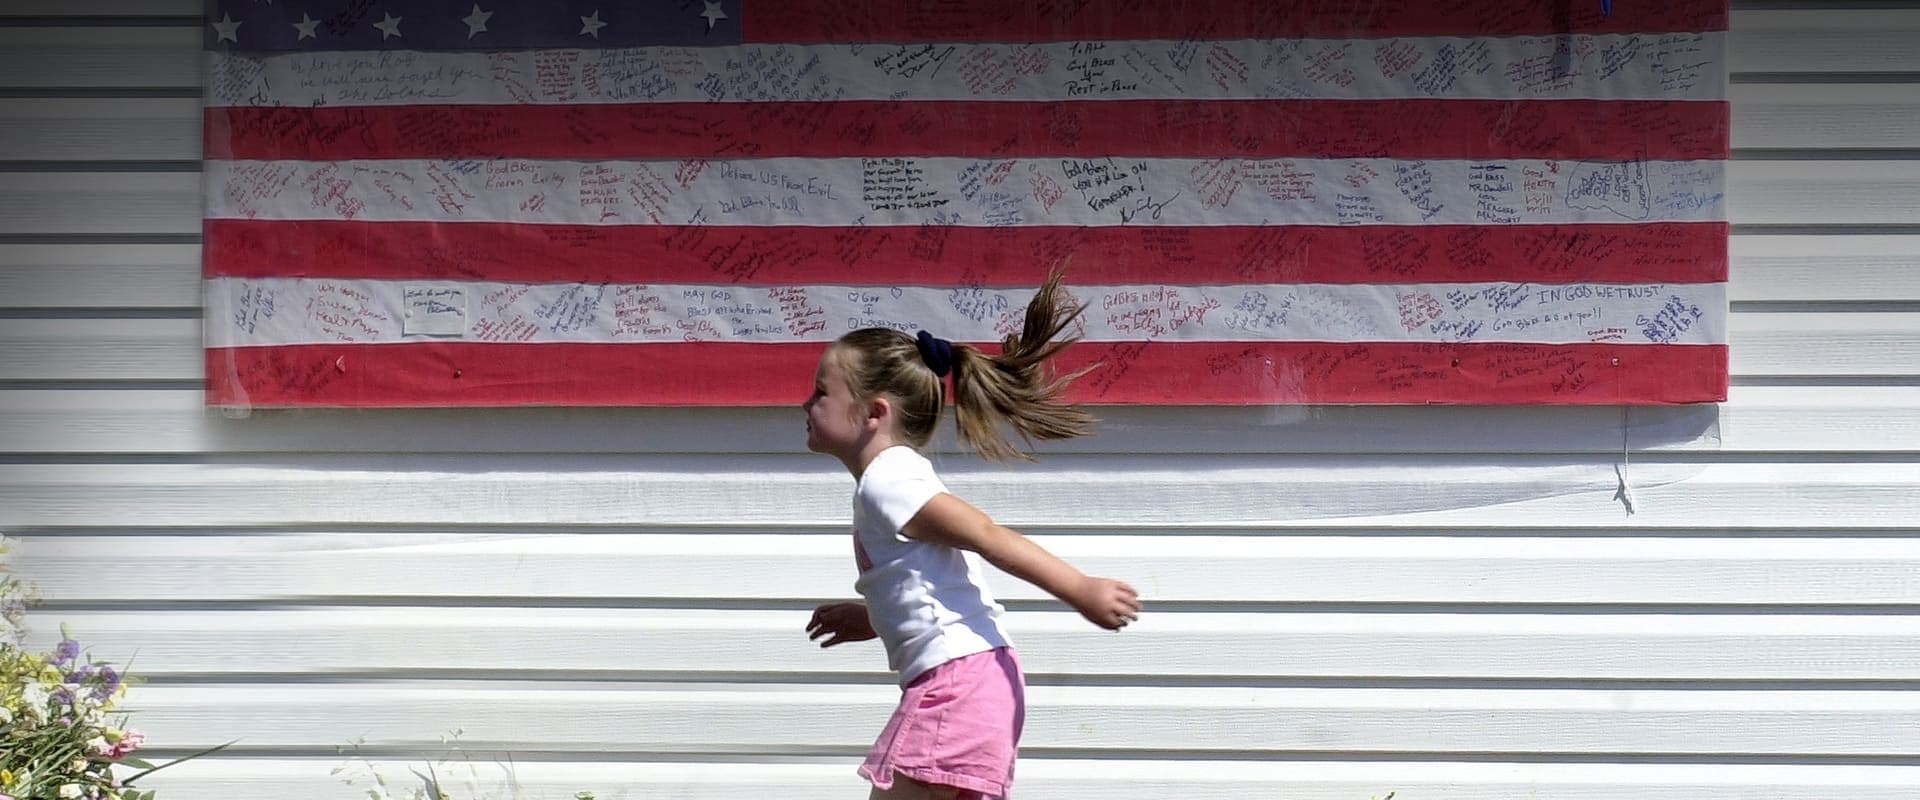 Rebuilding Hope: The Children of 9/11